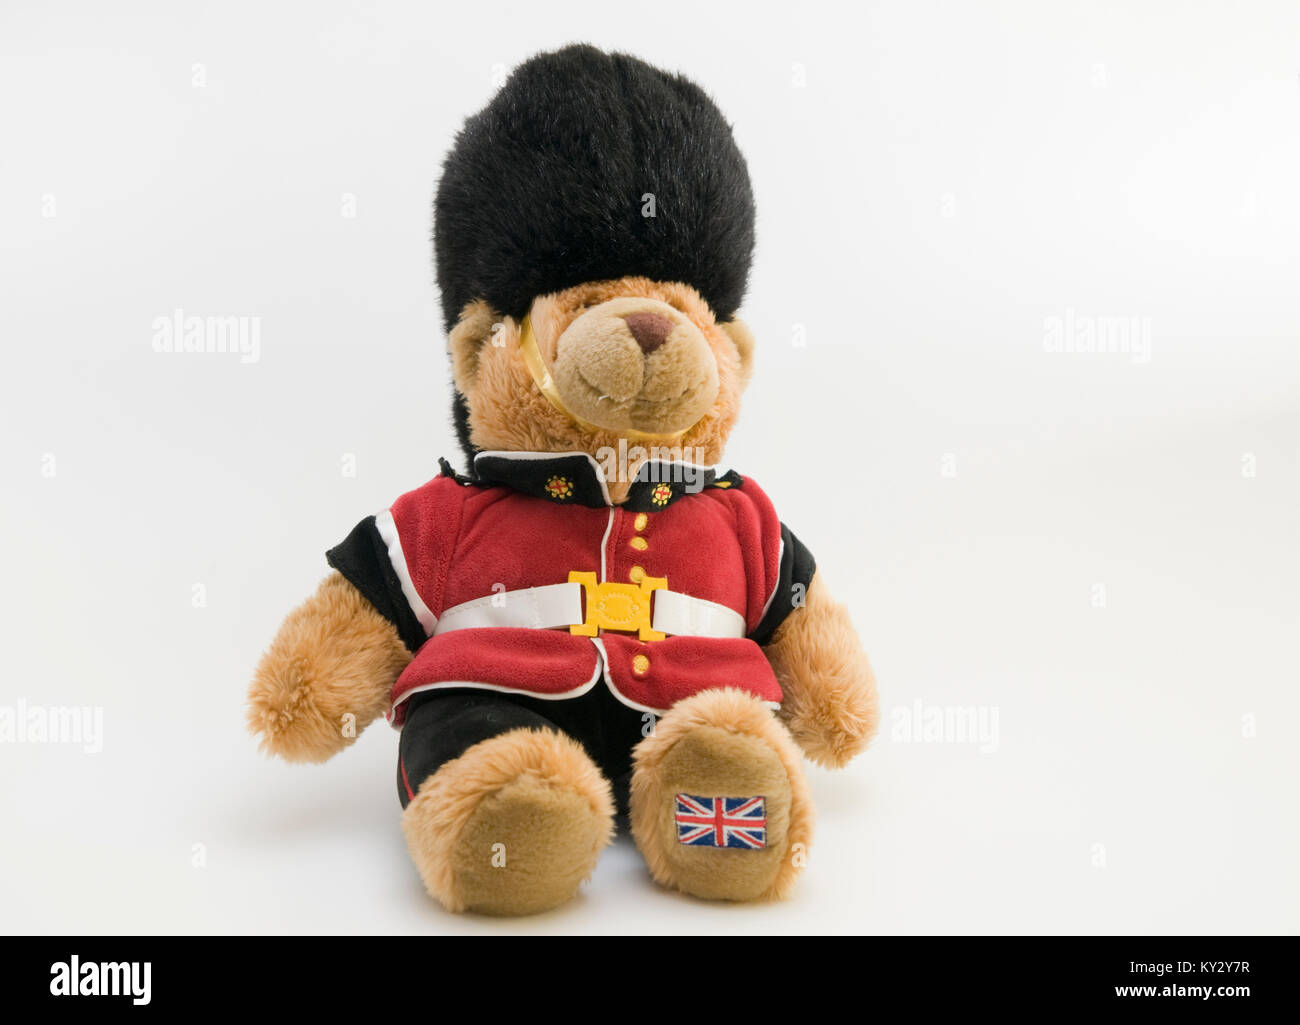 Britische Soldaten beefeater Buckingham Palace guard Teddybär gefüllte  Puppe Stockfotografie - Alamy